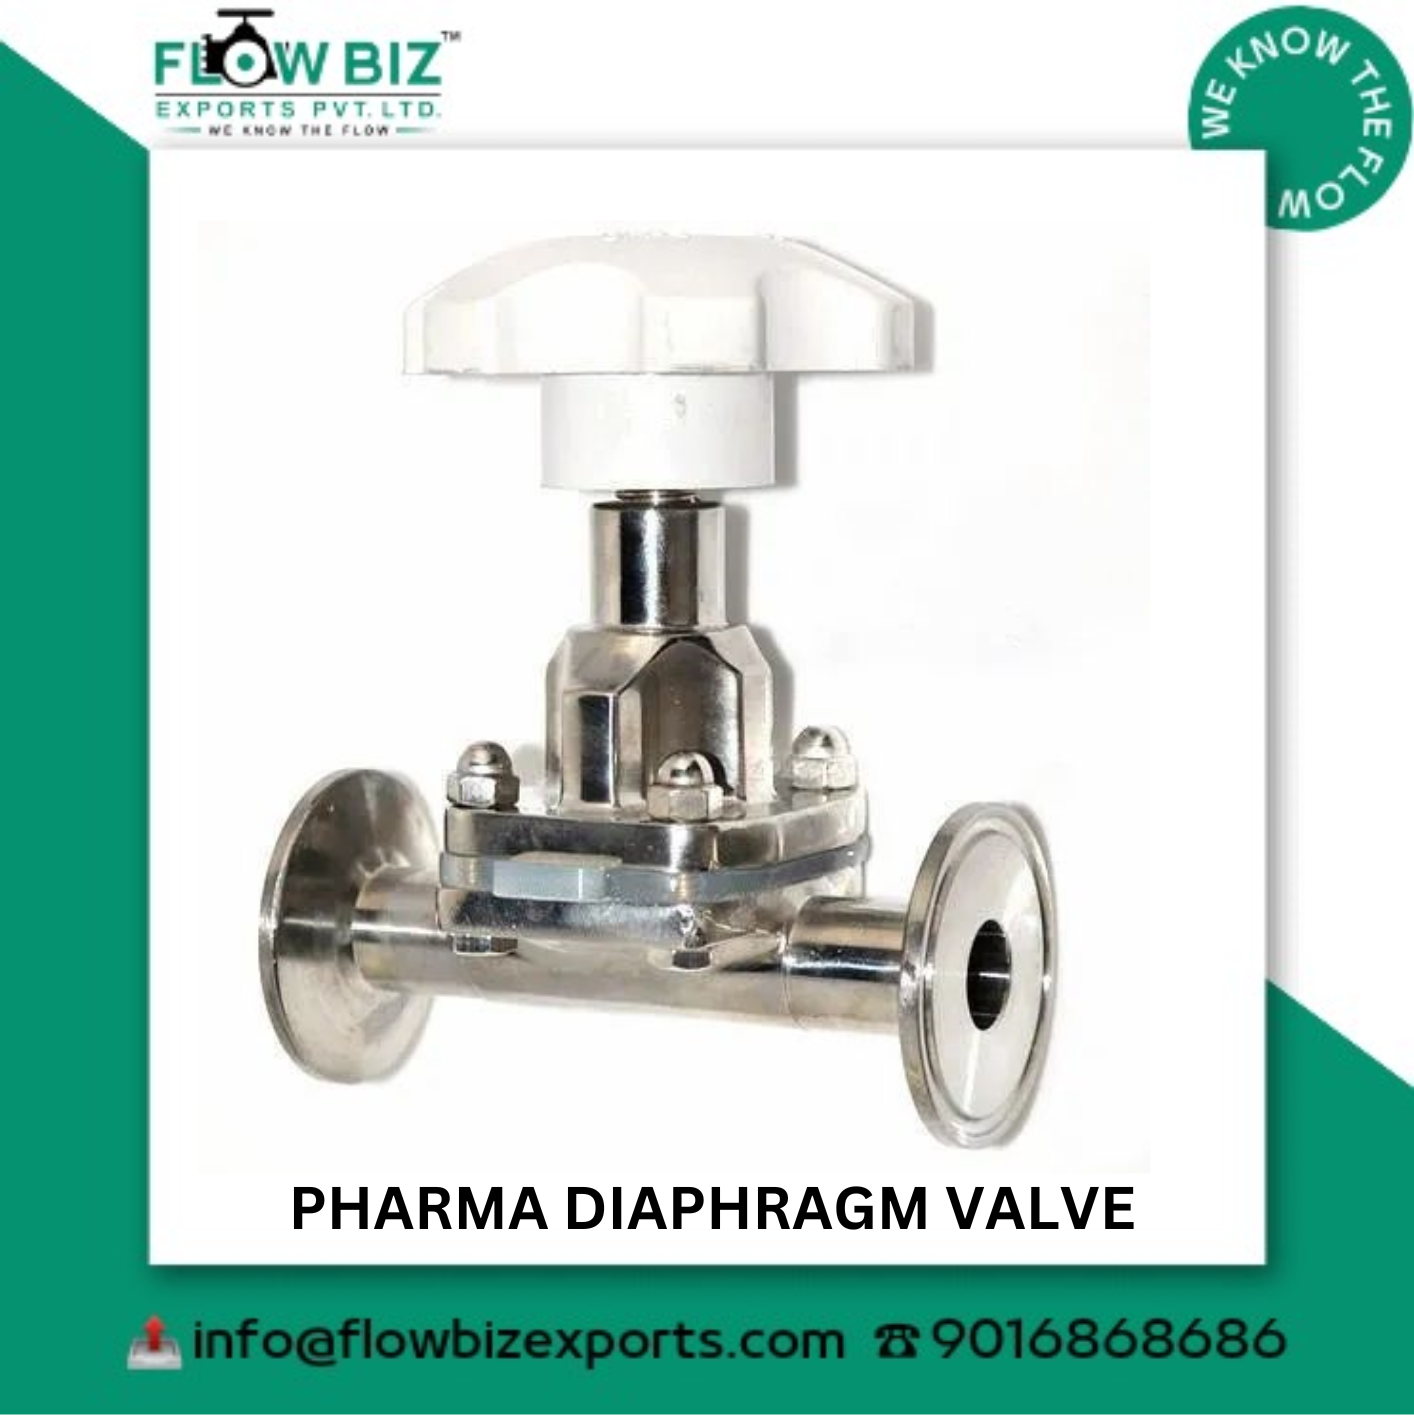 top 10 pharma diaphragm valve manufacturer mumbai - Flowbiz